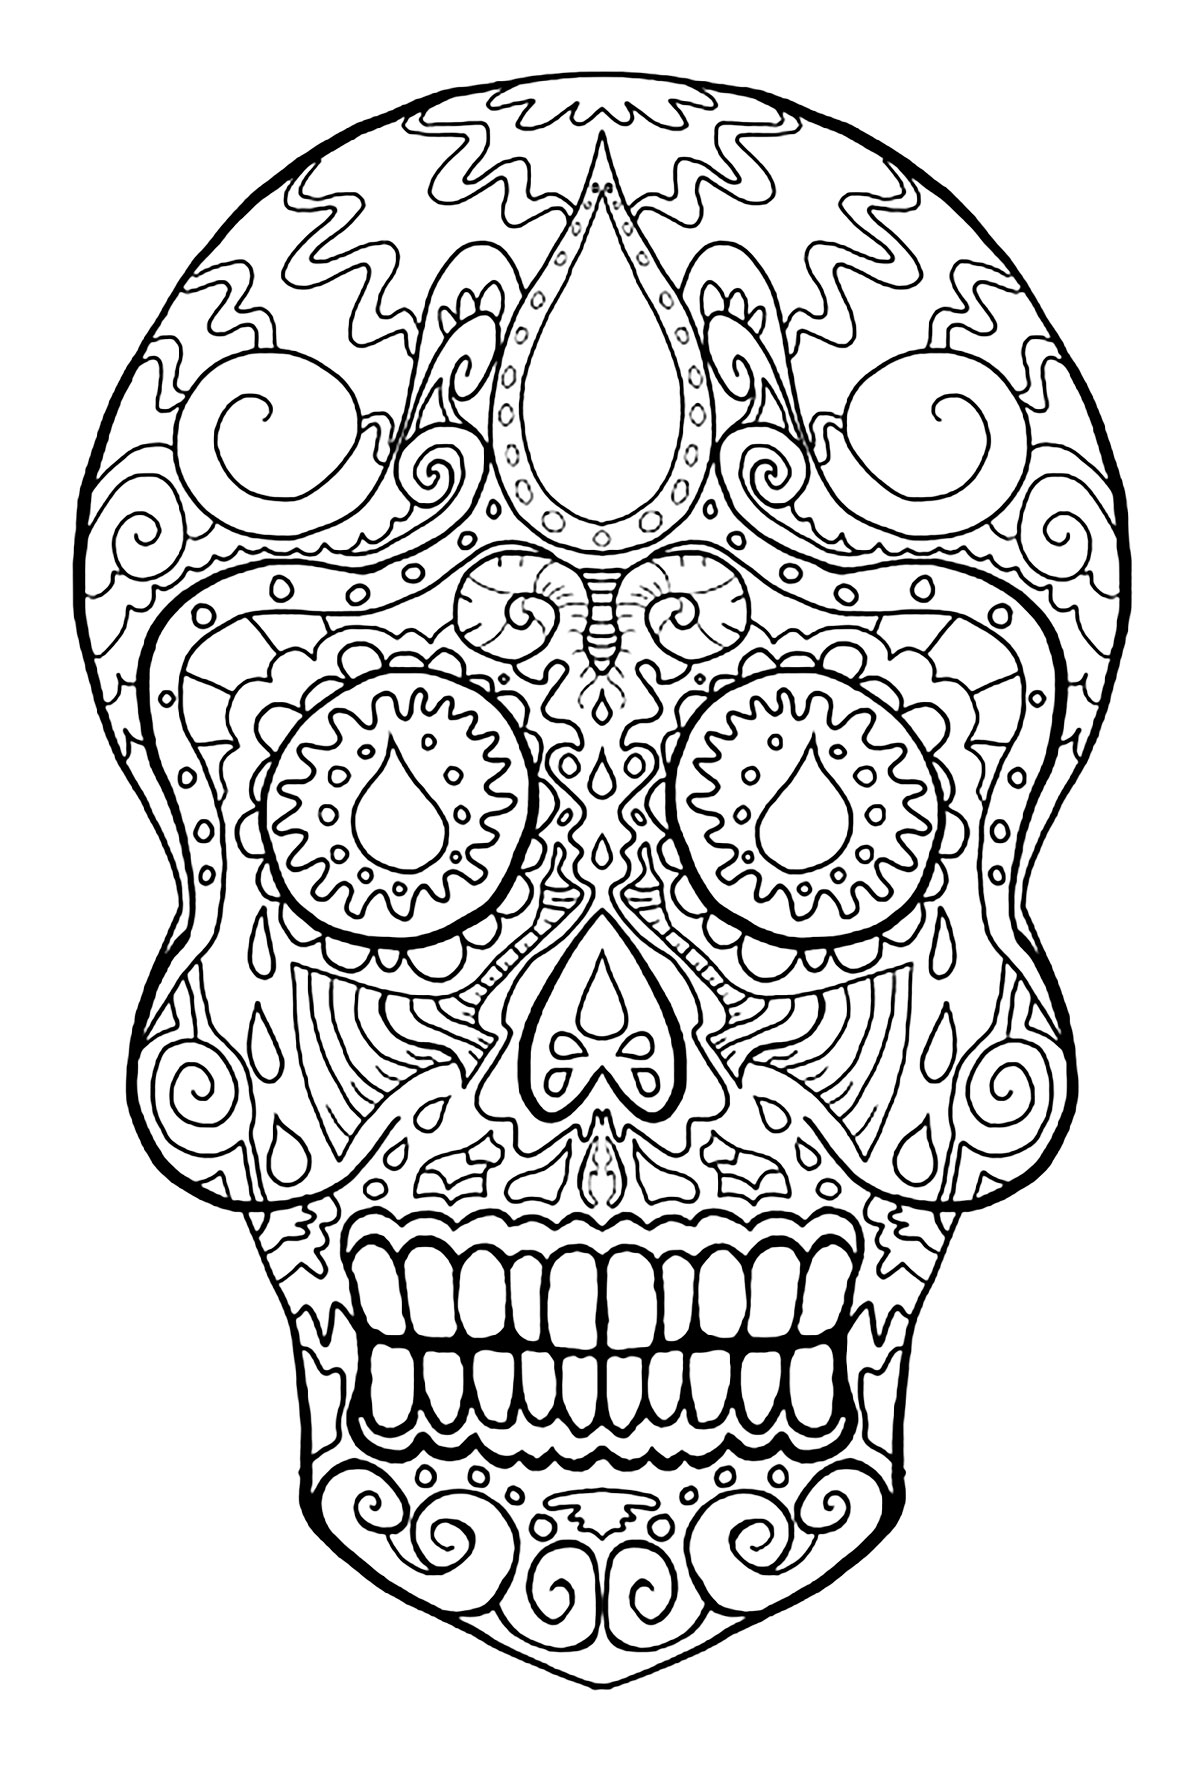 Teschio rappresentativo della festività messicana 'Dia de los Muertos. Questa pagina da colorare è ispirata alla festa messicana Dias de los Muertos. Rappresenta un teschio, simbolo essenziale di questa festa.
